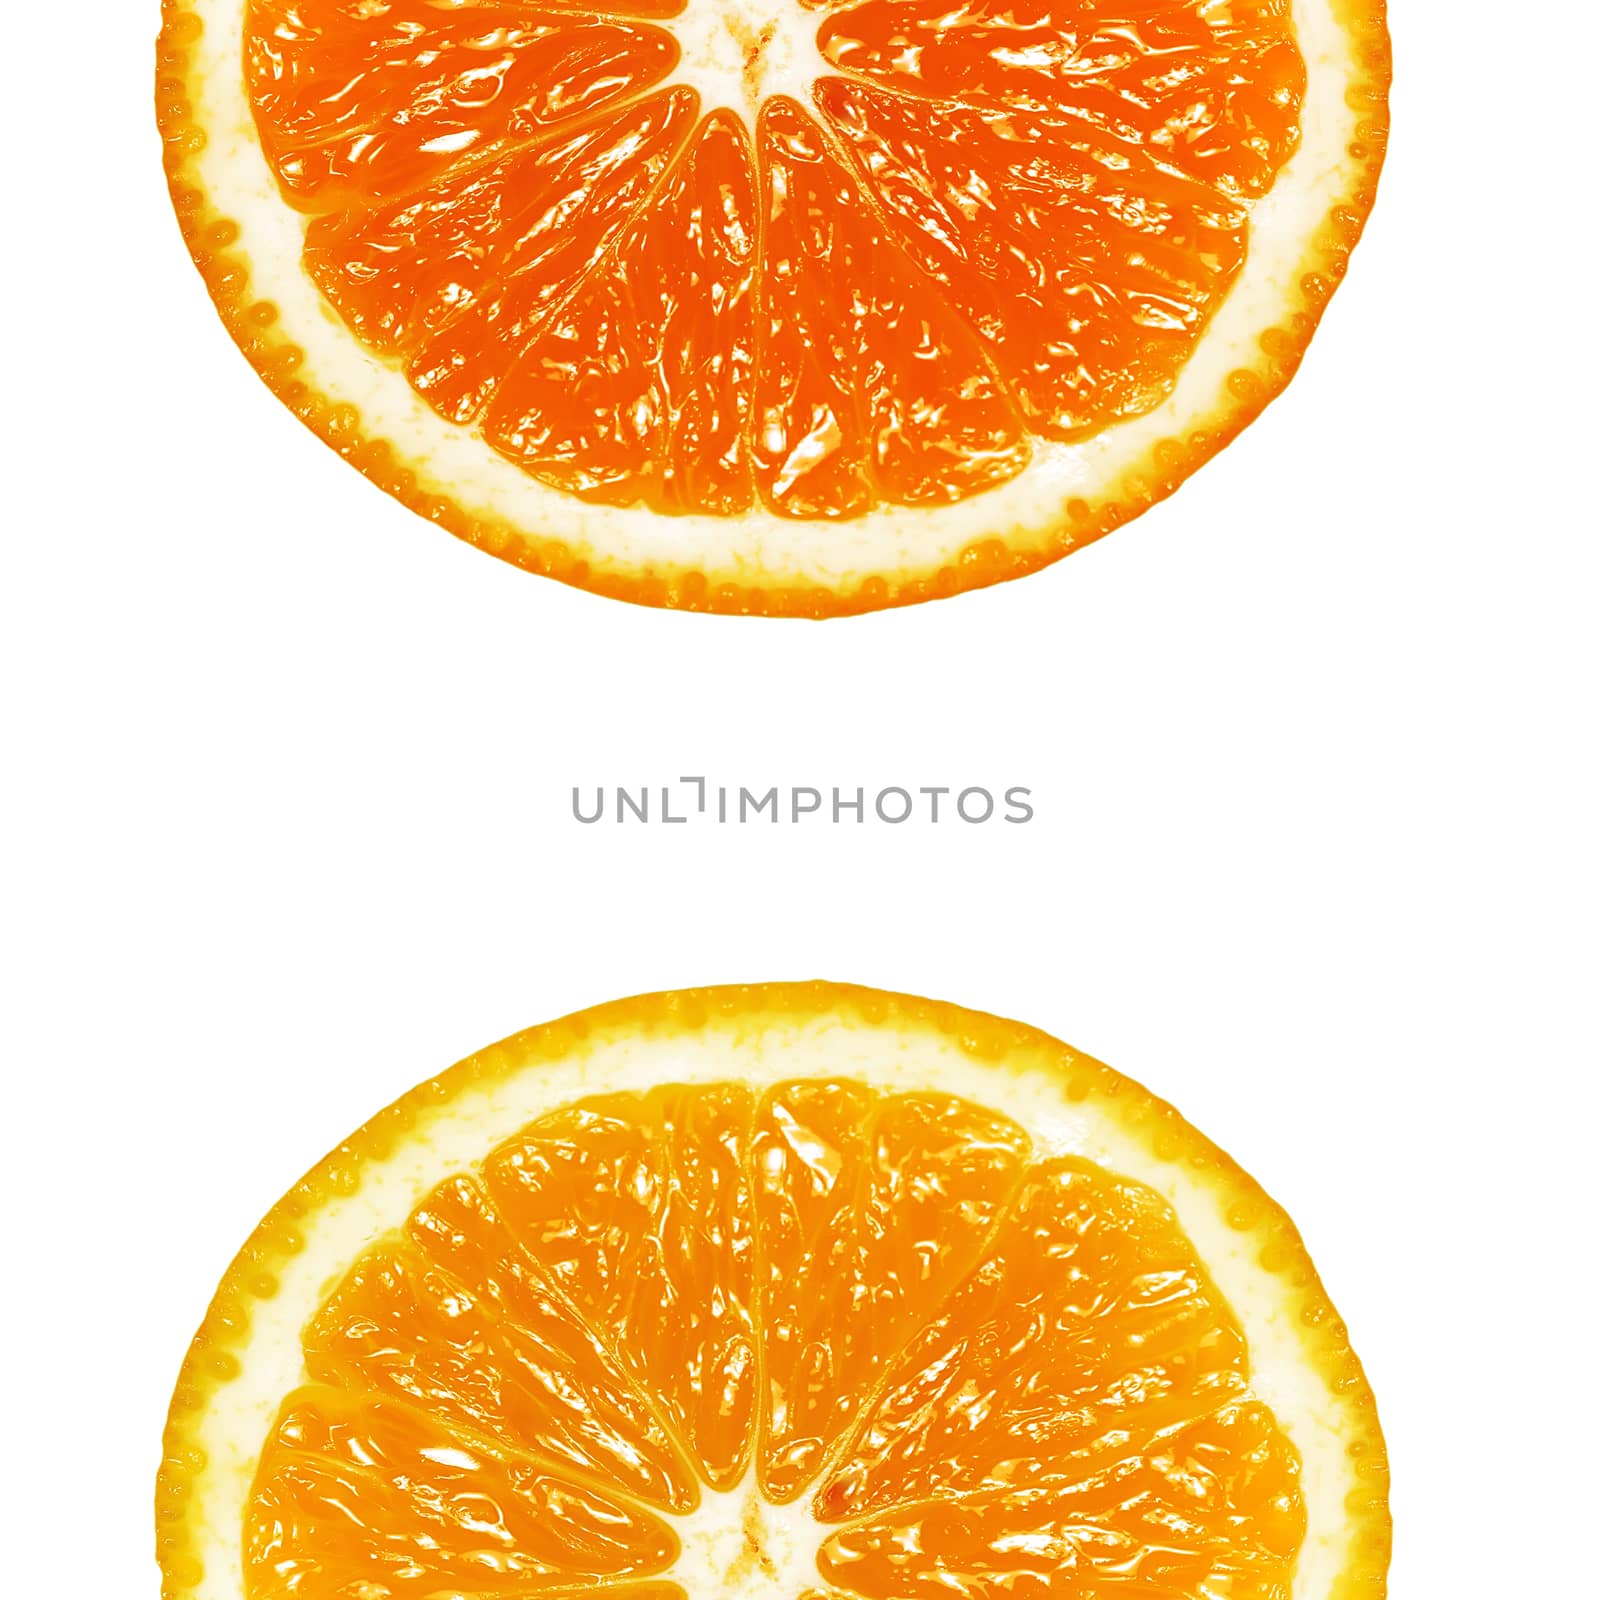 two halves of orange on a white background